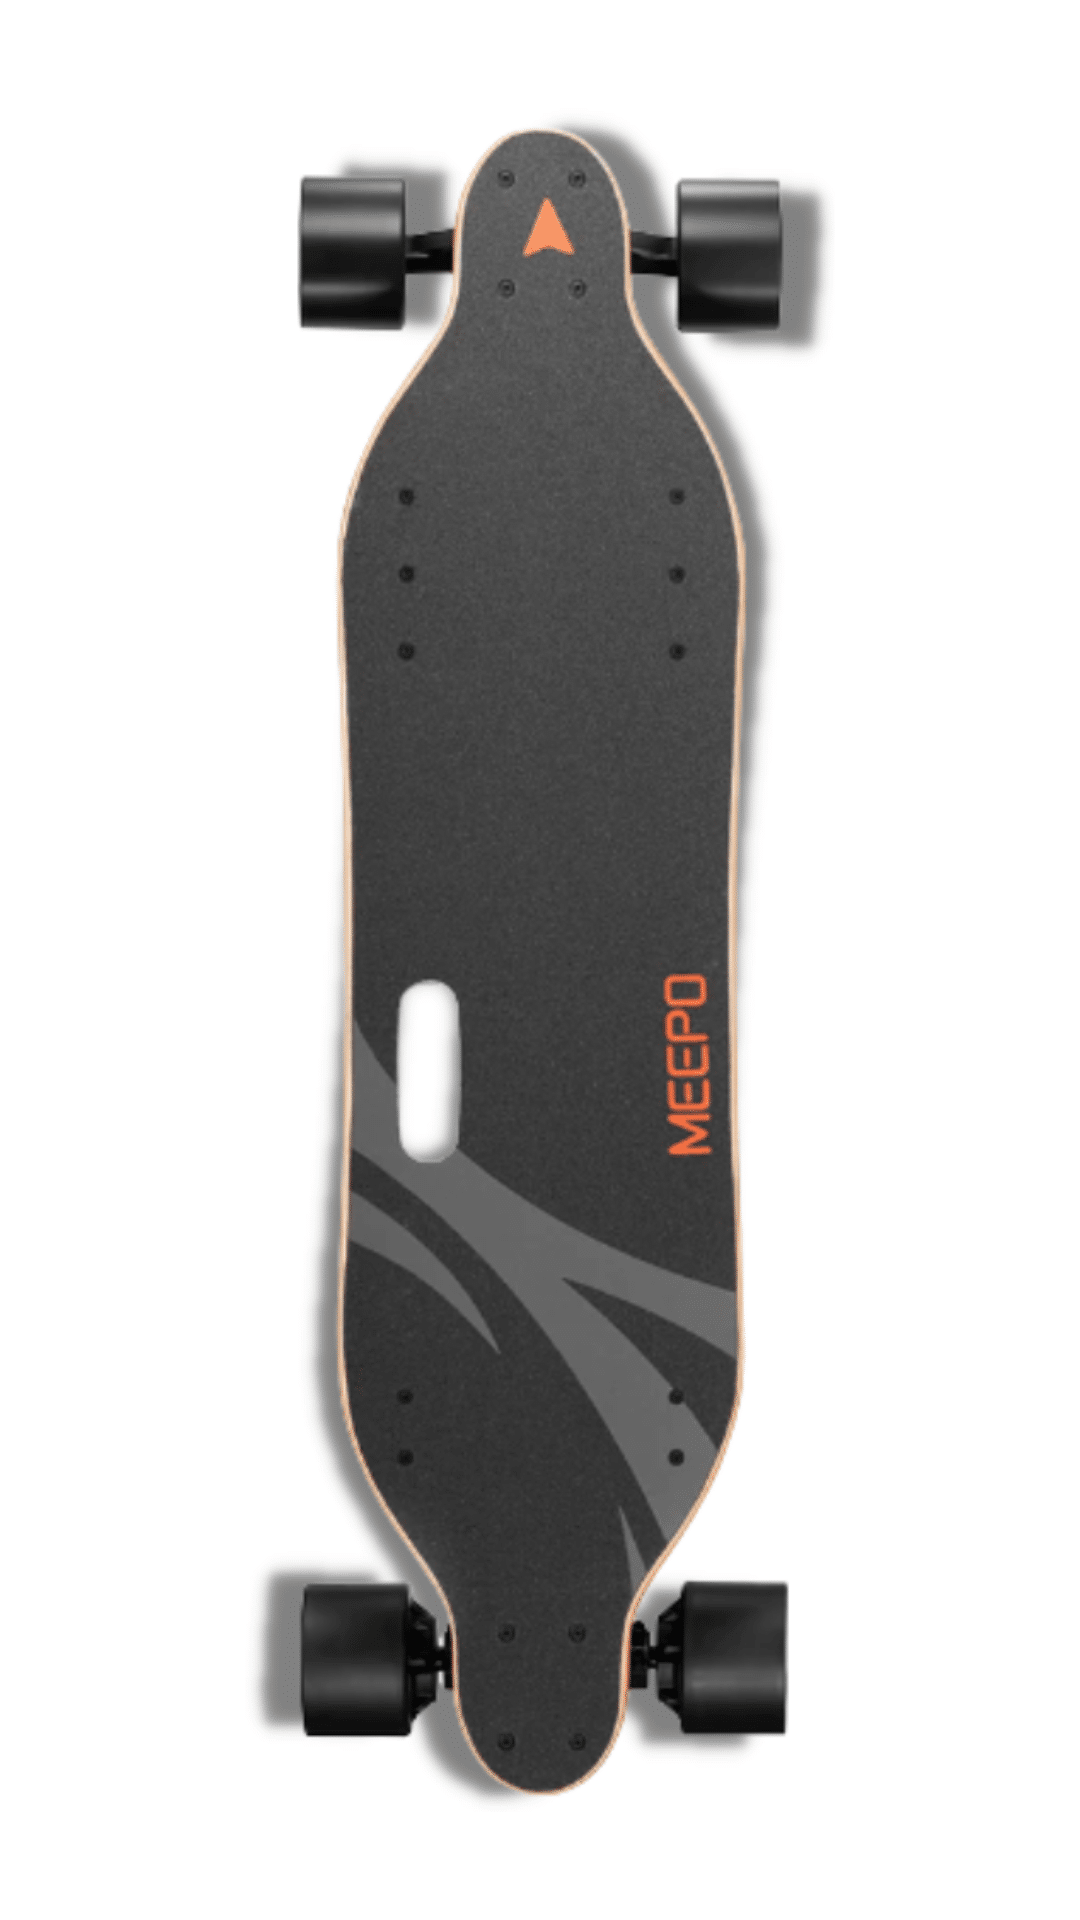 Meepo V3S electric skateboard